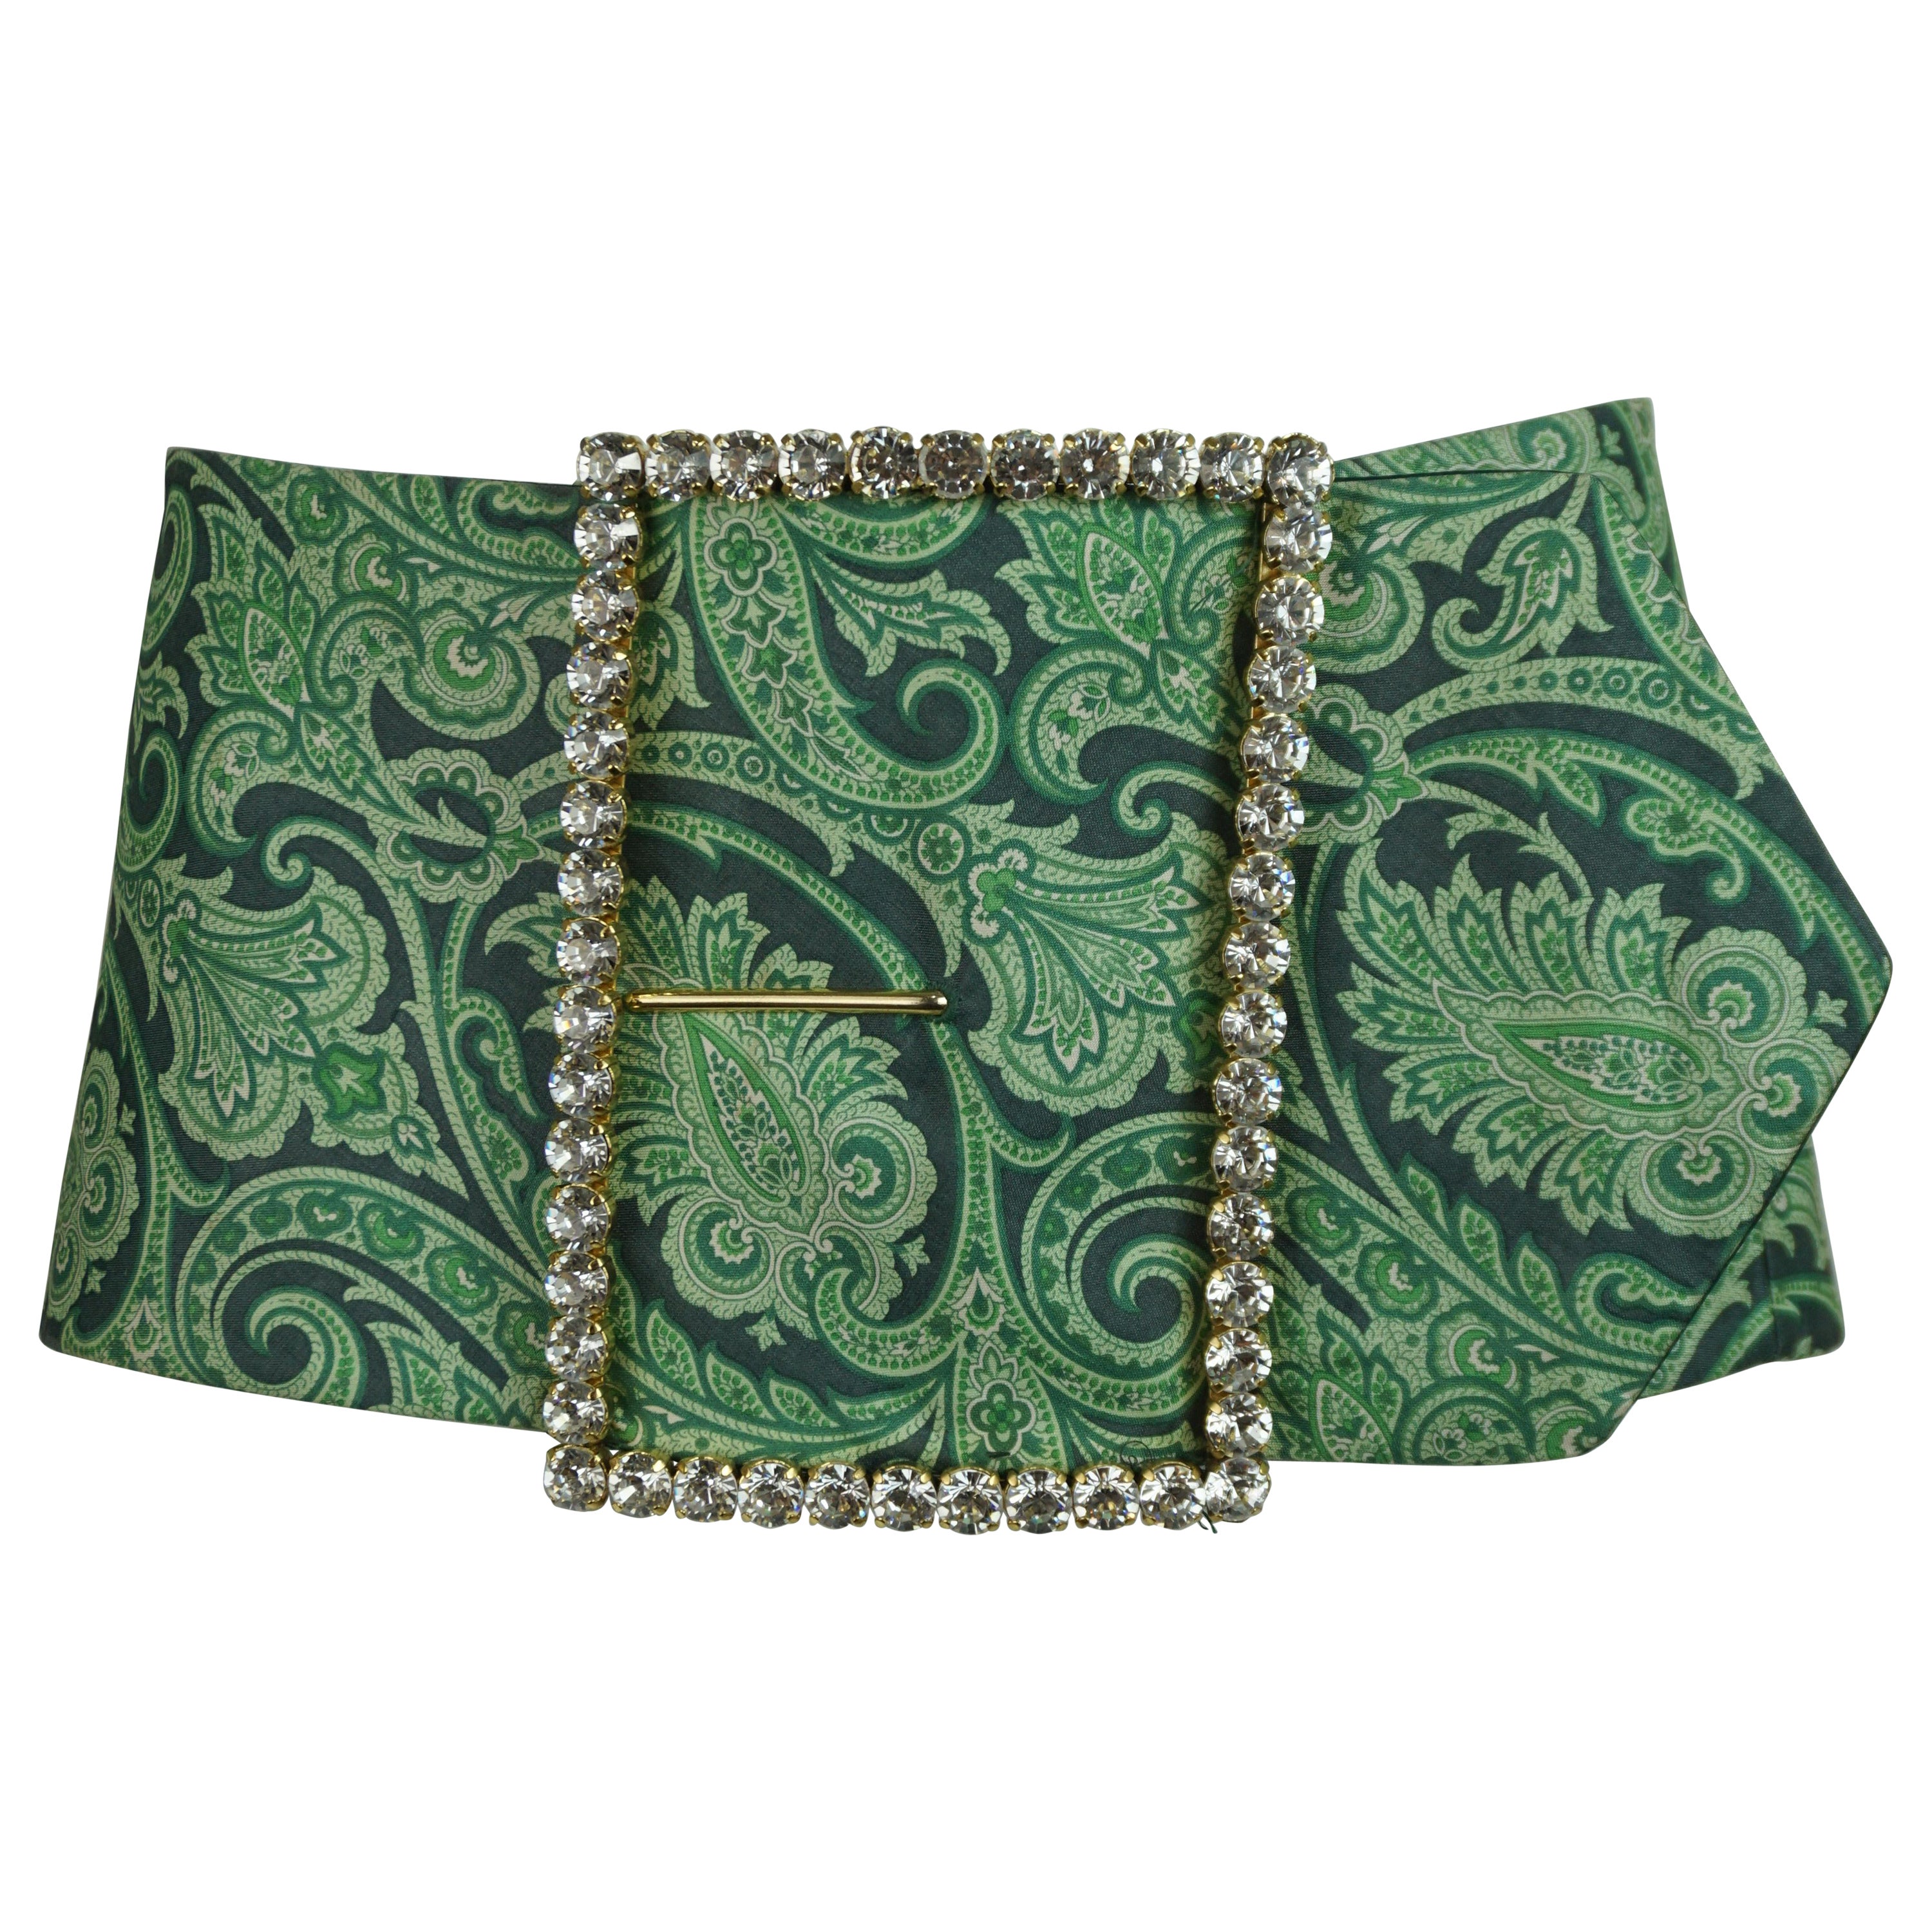 Dolce & Gabbana green Paisley Skirt S/S 2000